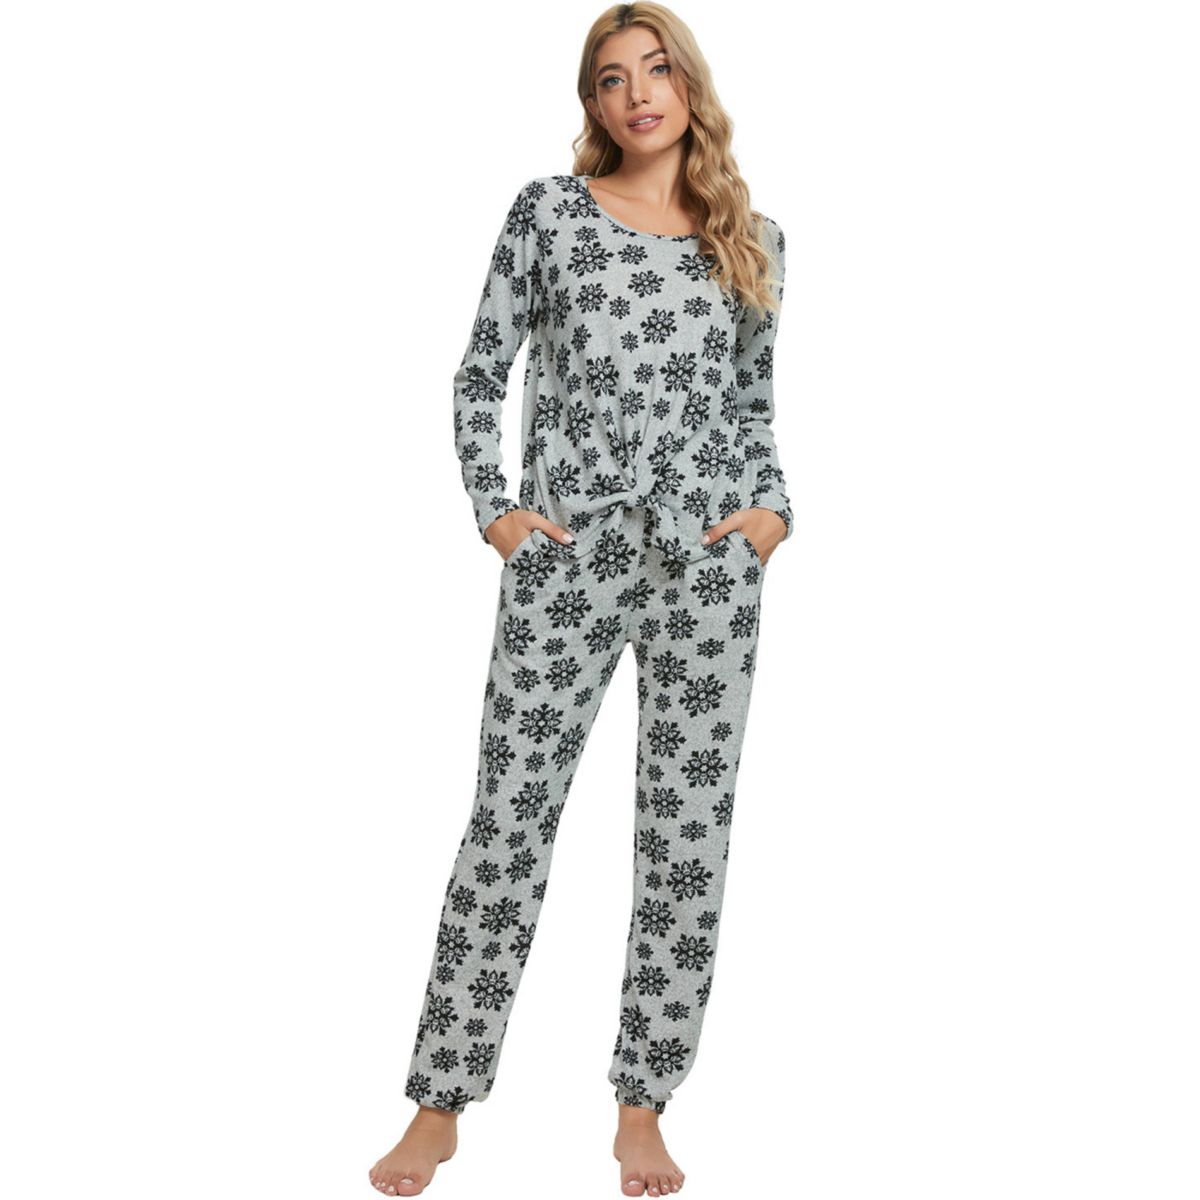 Women's Sleepwear Lounge Soft Nightwear with Pockets Long Sleeve Pajama Set Cheibear